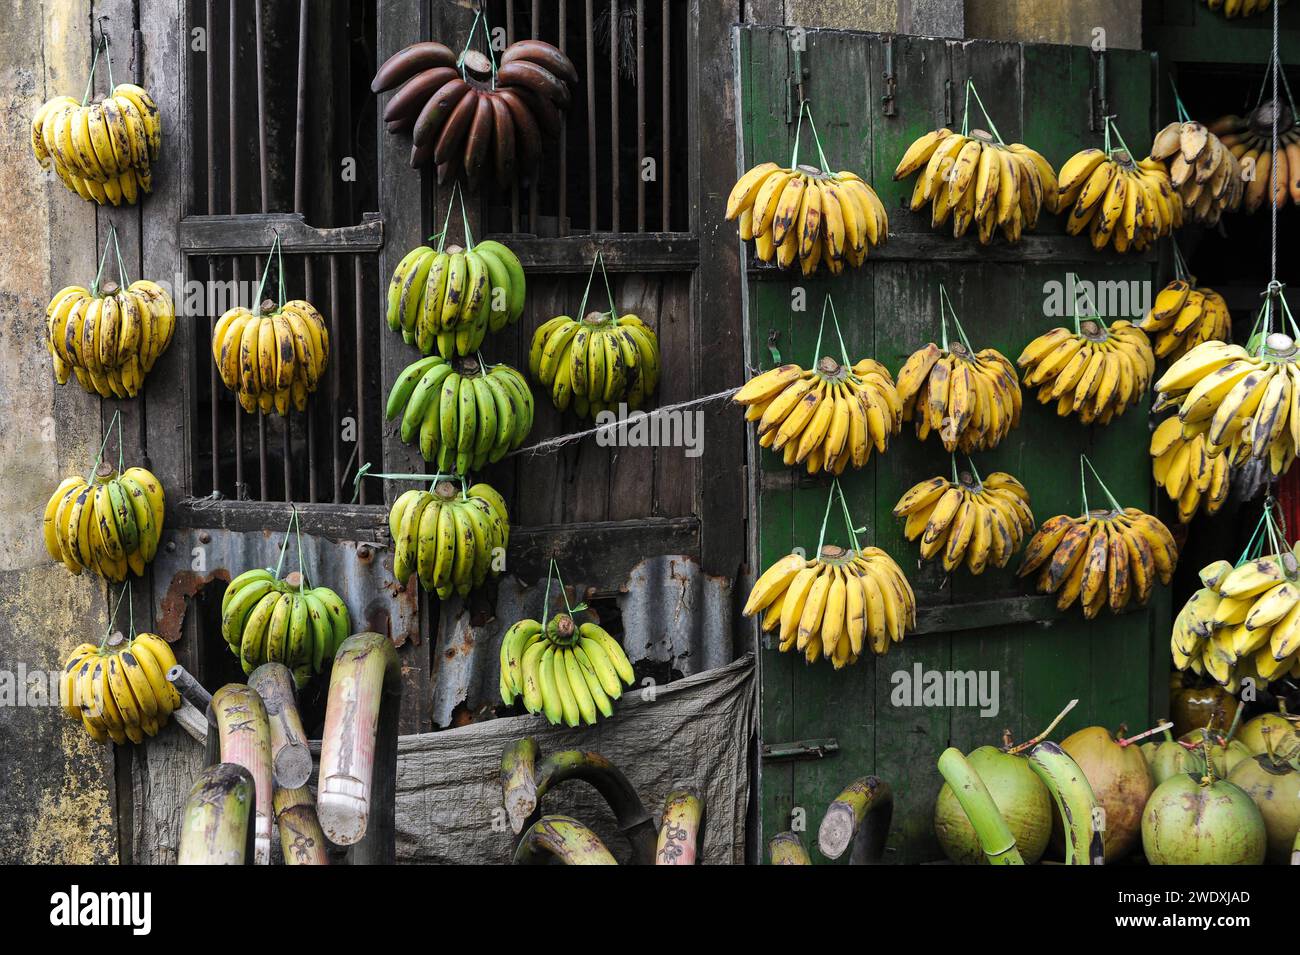 09.01.2014, Rangoon/Yangon, Myanmar, Asien - Frische Bananen haengen an einem Geschaeft und werden zum Verkauf angeboten. *** 09 01 2014, Yangon, Myanmar, Asia banane fresche appese a un negozio e messe in vendita Foto Stock